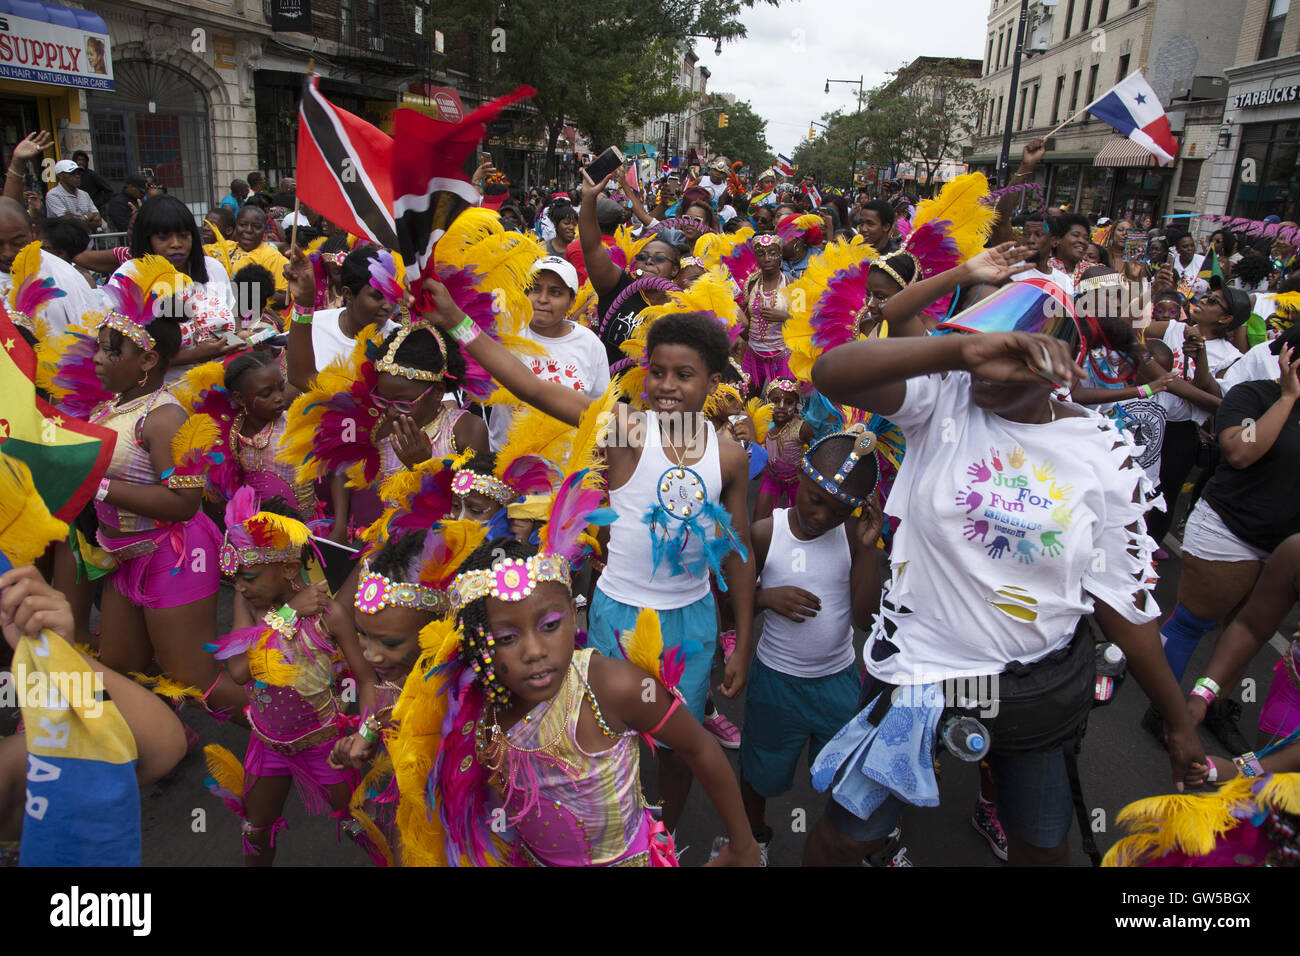 Caribbean Kiddie Parade kicks off the Caribbean Carnival over Labor Day